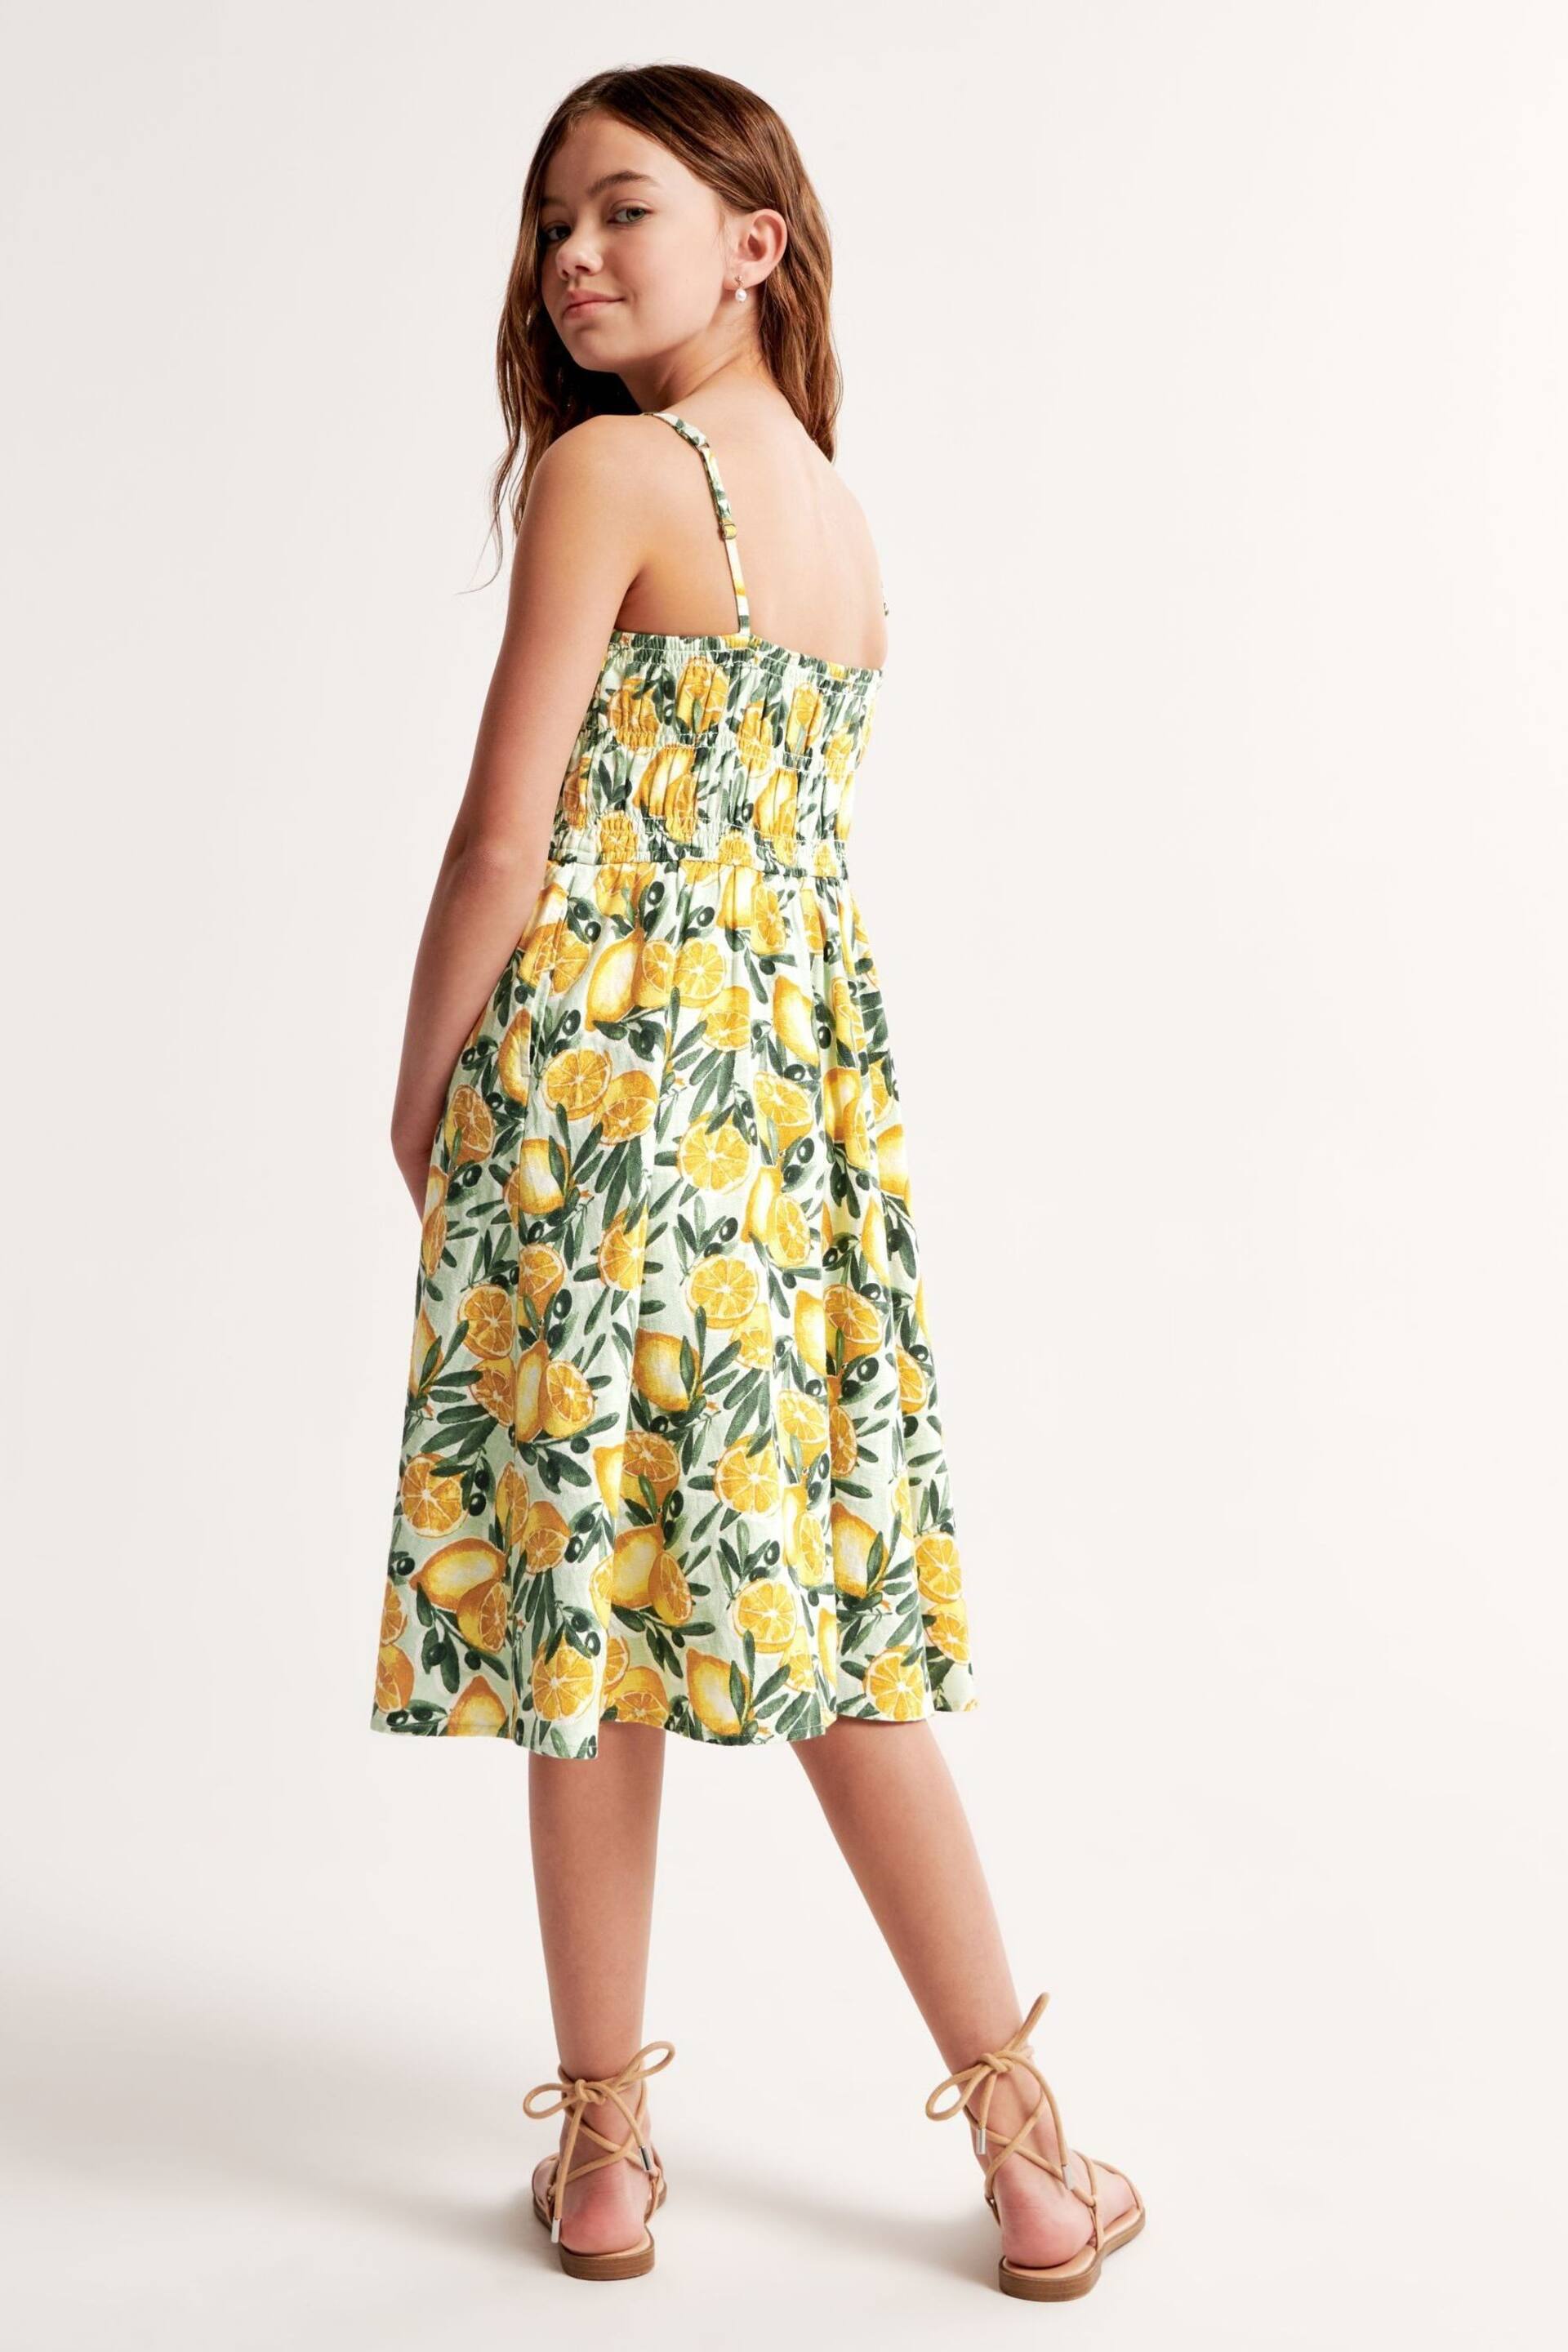 Abercrombie & Fitch Yellow Lemon Print Maxi Dress - Image 2 of 6